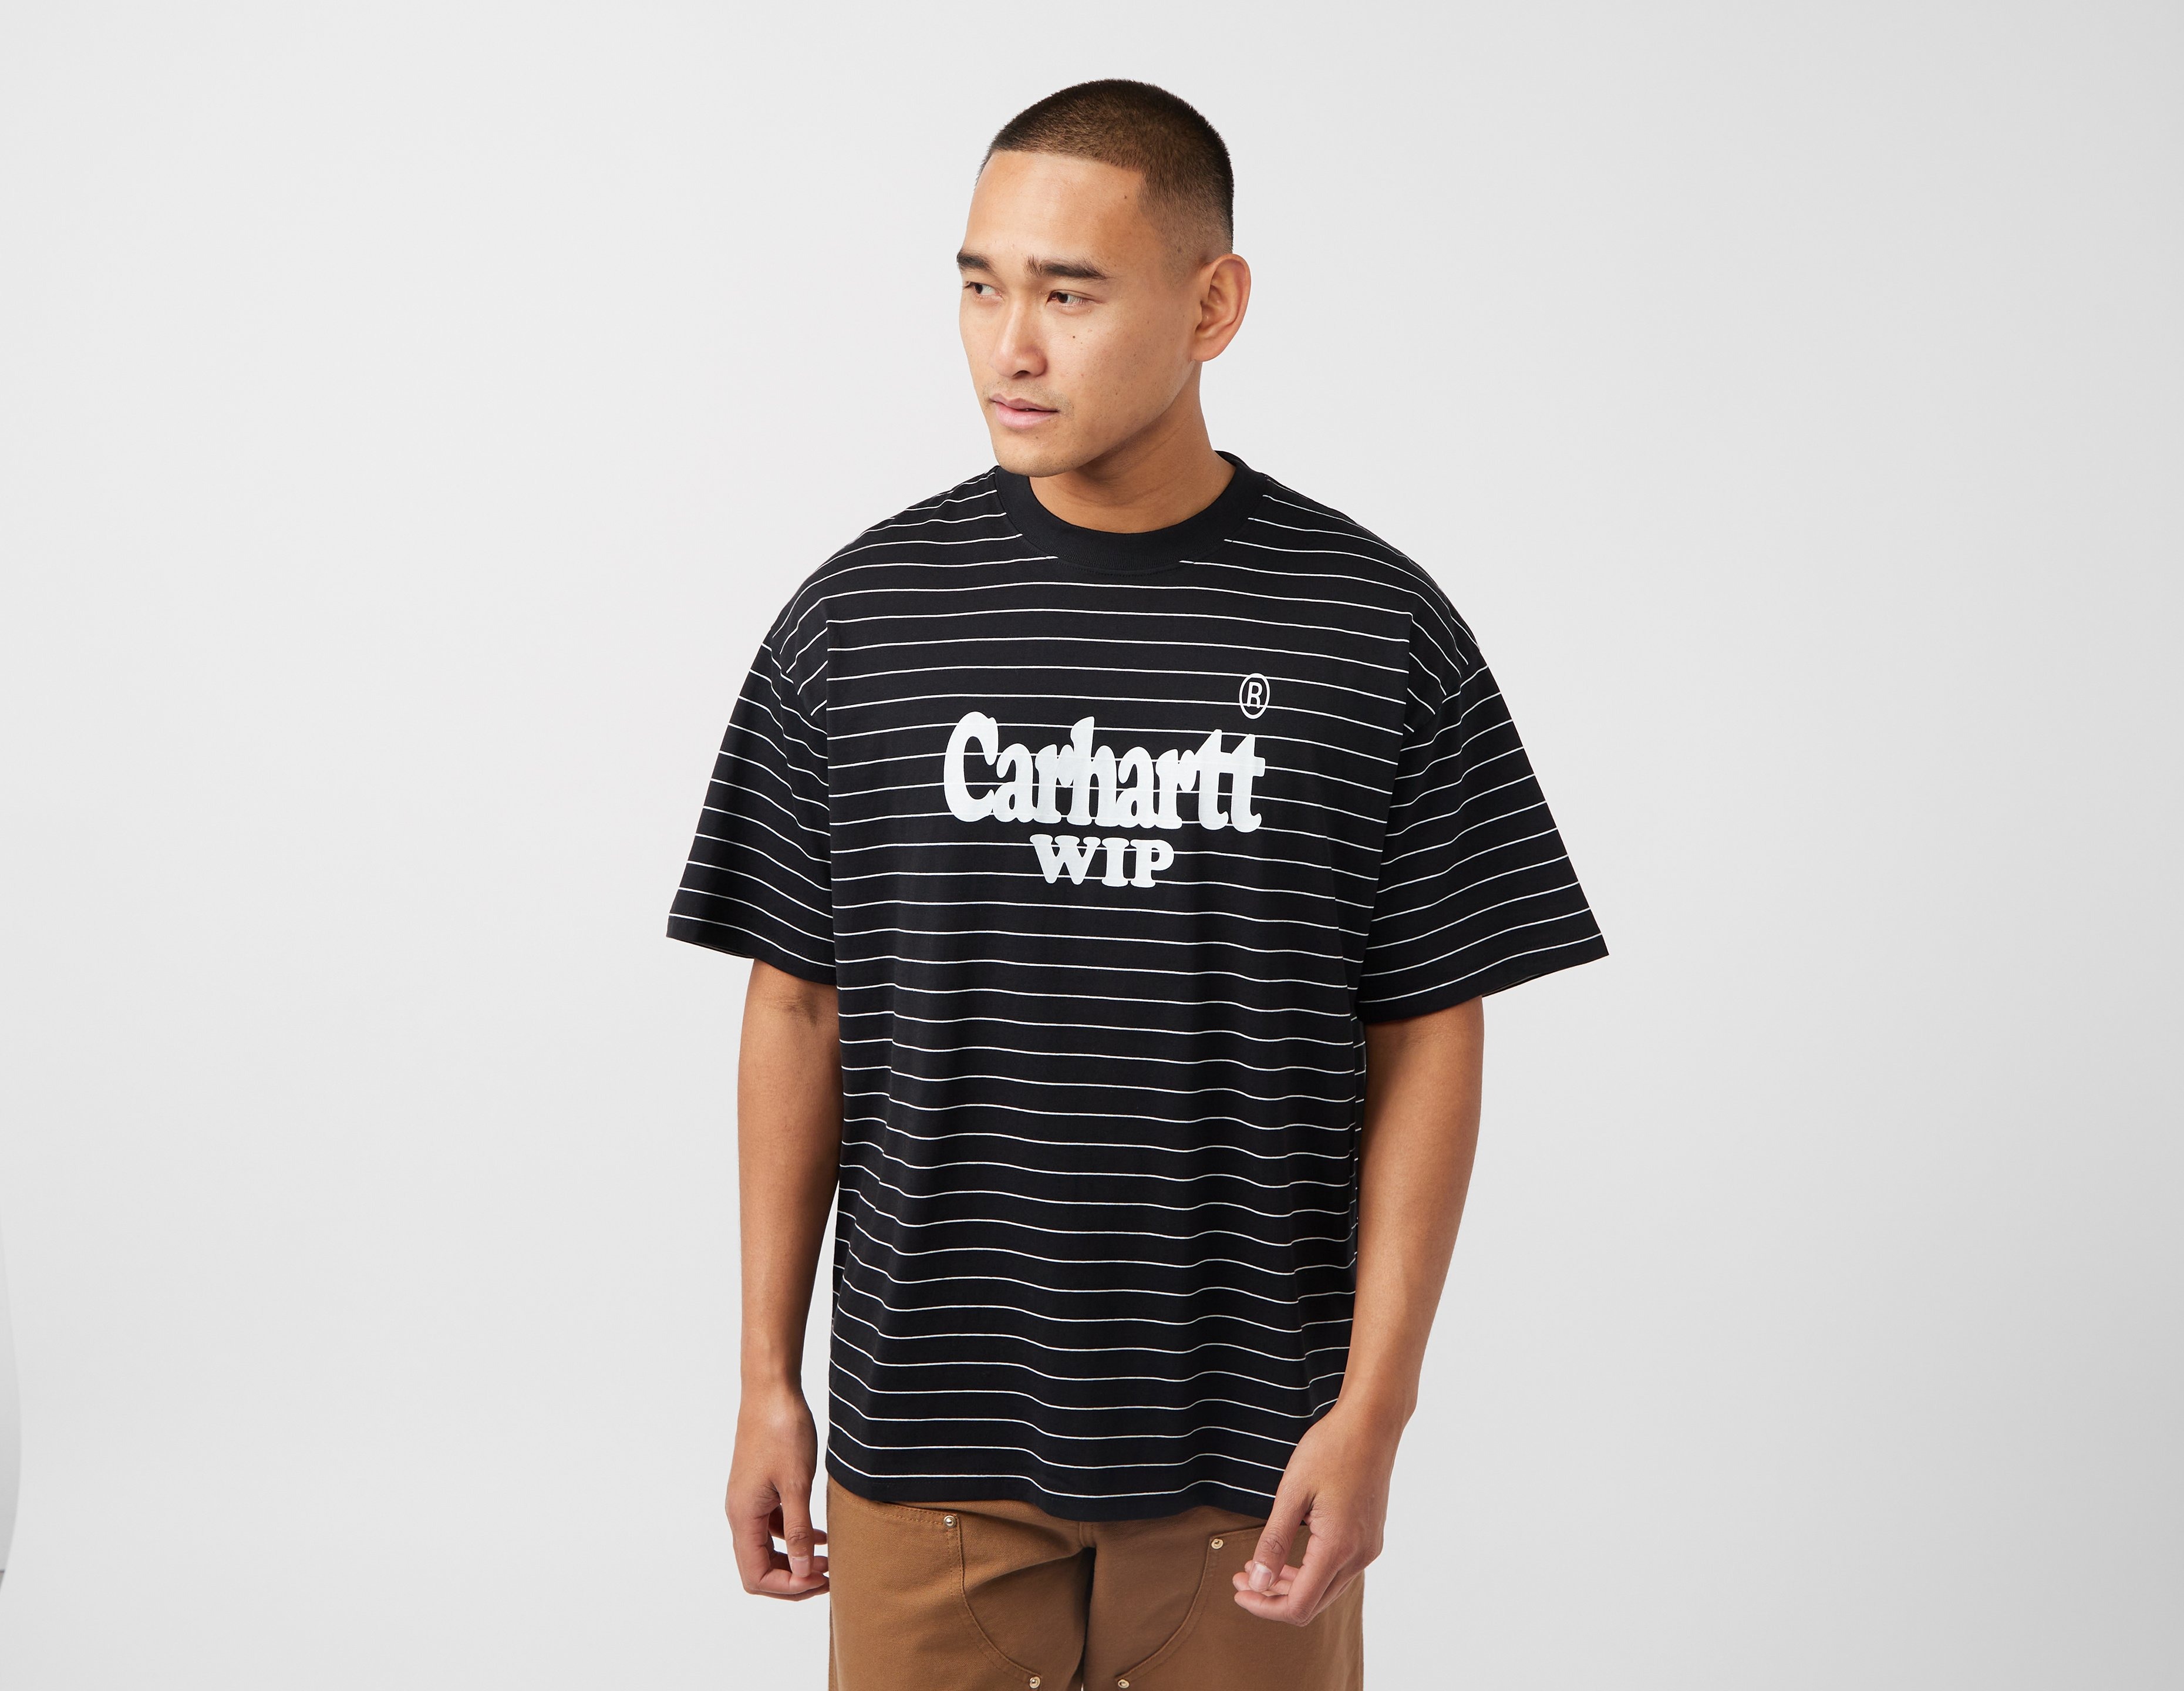 T Manches Spree Enfant Black Orlean Healthdesign? Carhartt Shirt - Coudieres - Shirt WIP Coton T Bio Longues |